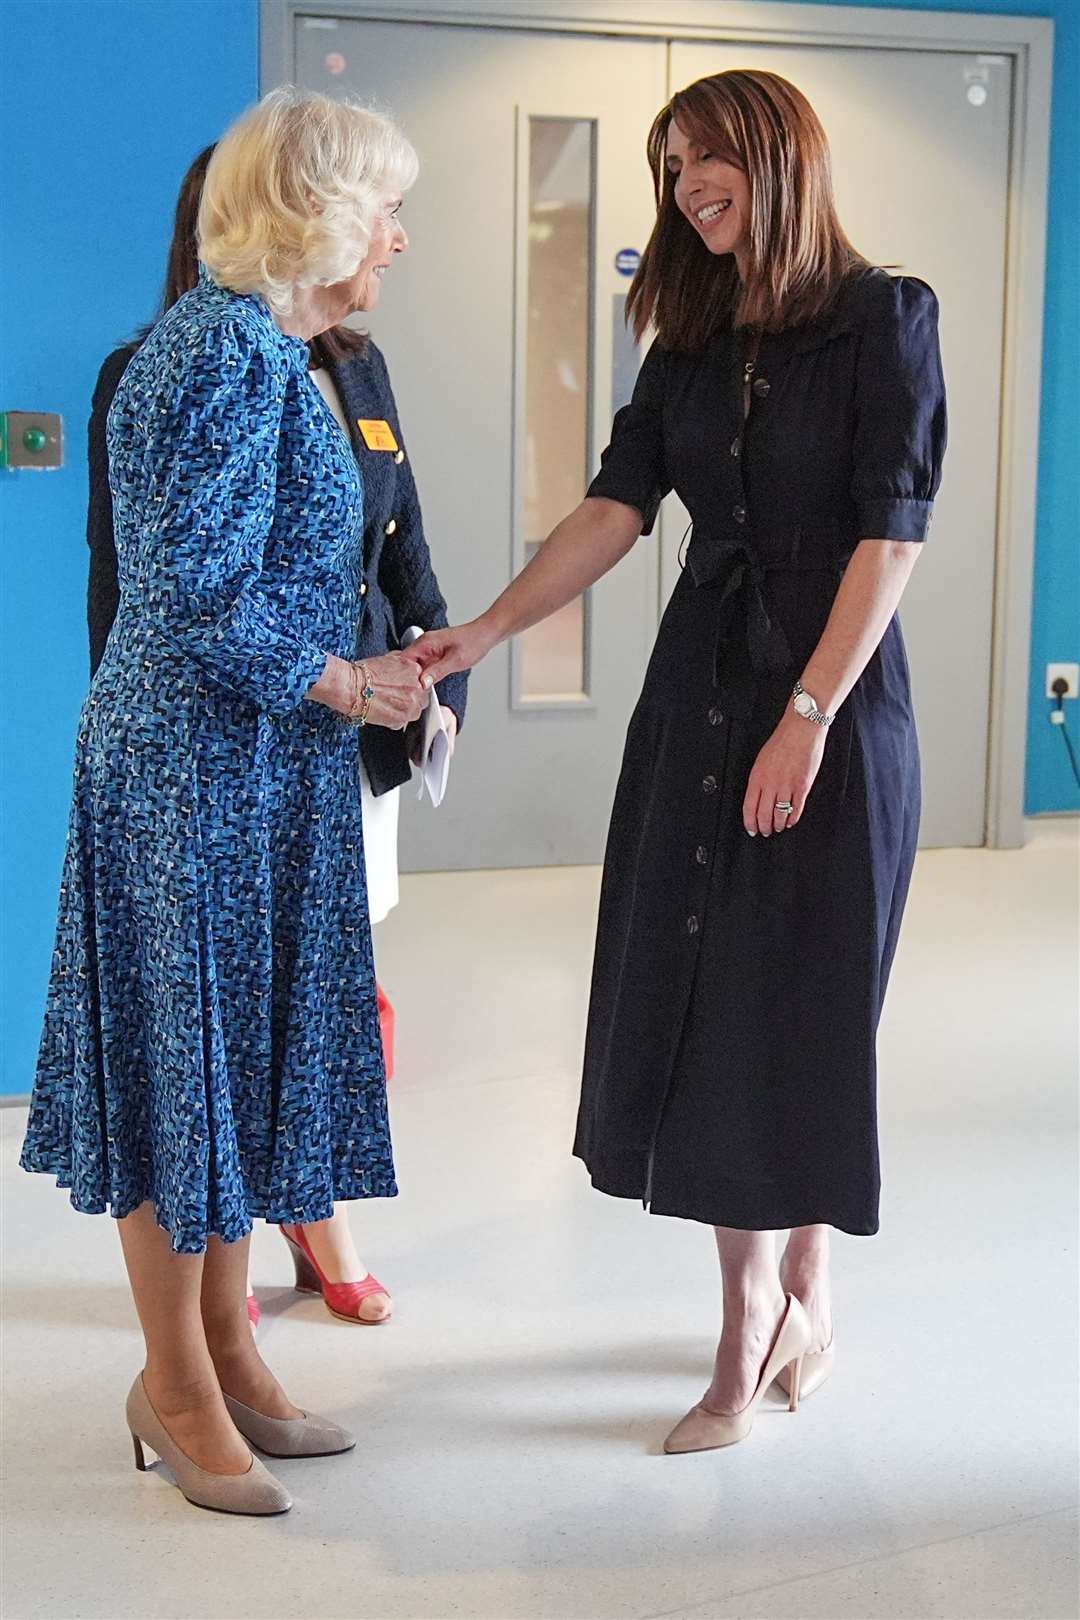 Camilla shakes hands with TV presenter Alex Jones (Aaron Chown/PA)